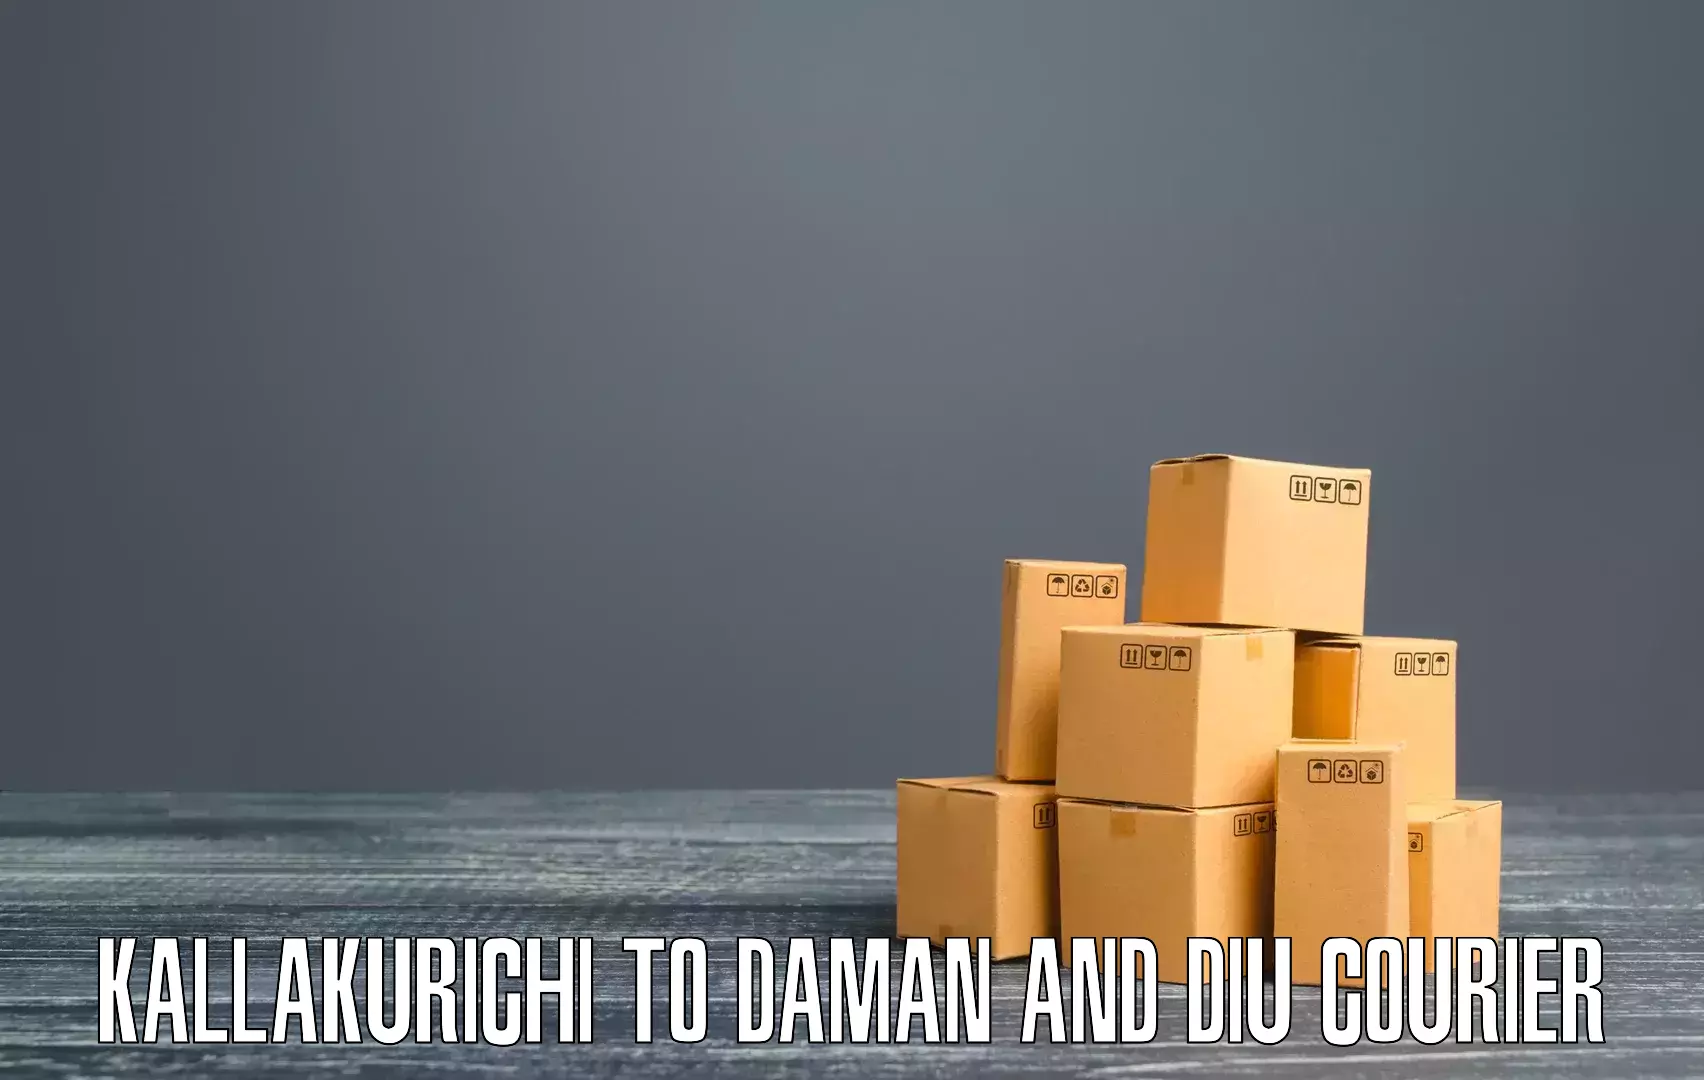 Modern delivery methods Kallakurichi to Diu